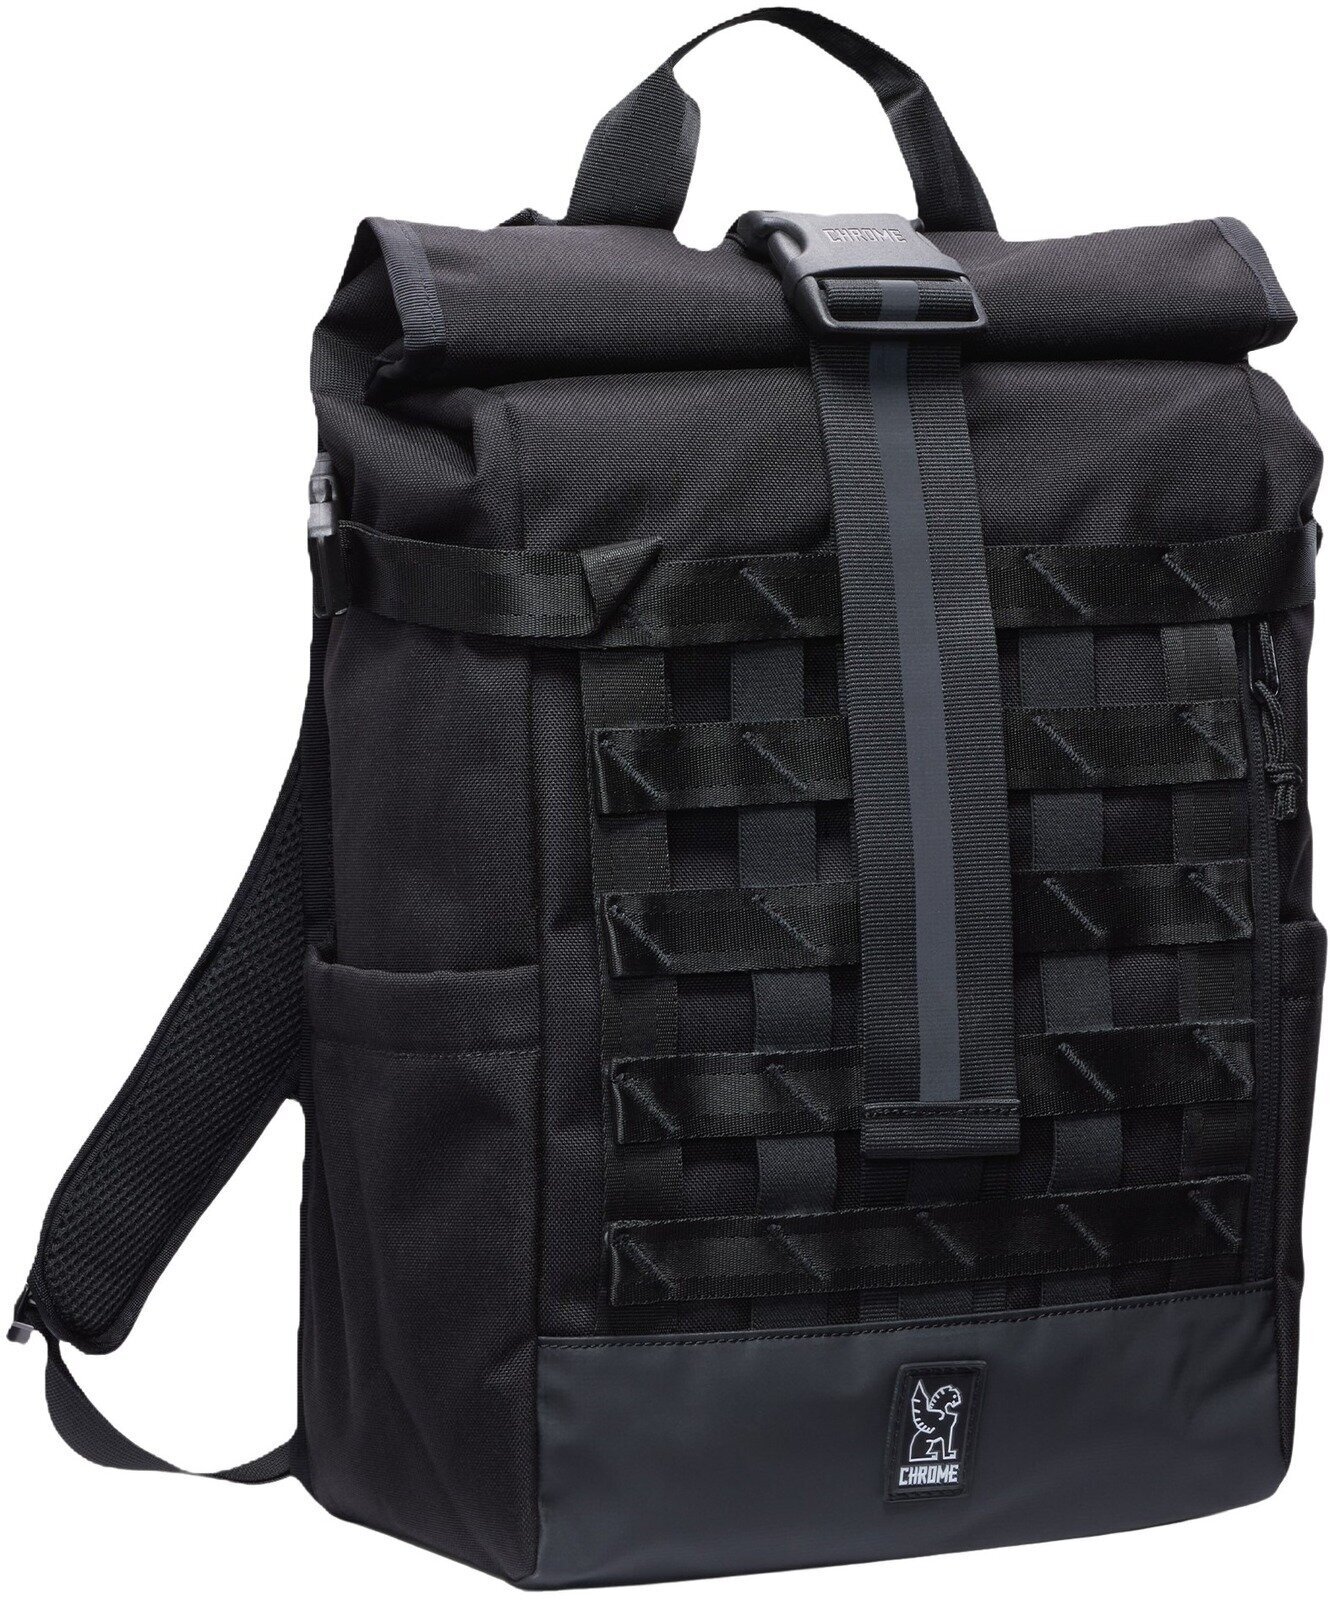 Lifestyle sac à dos / Sac Chrome Barrage Backpack Black 18 L Sac à dos